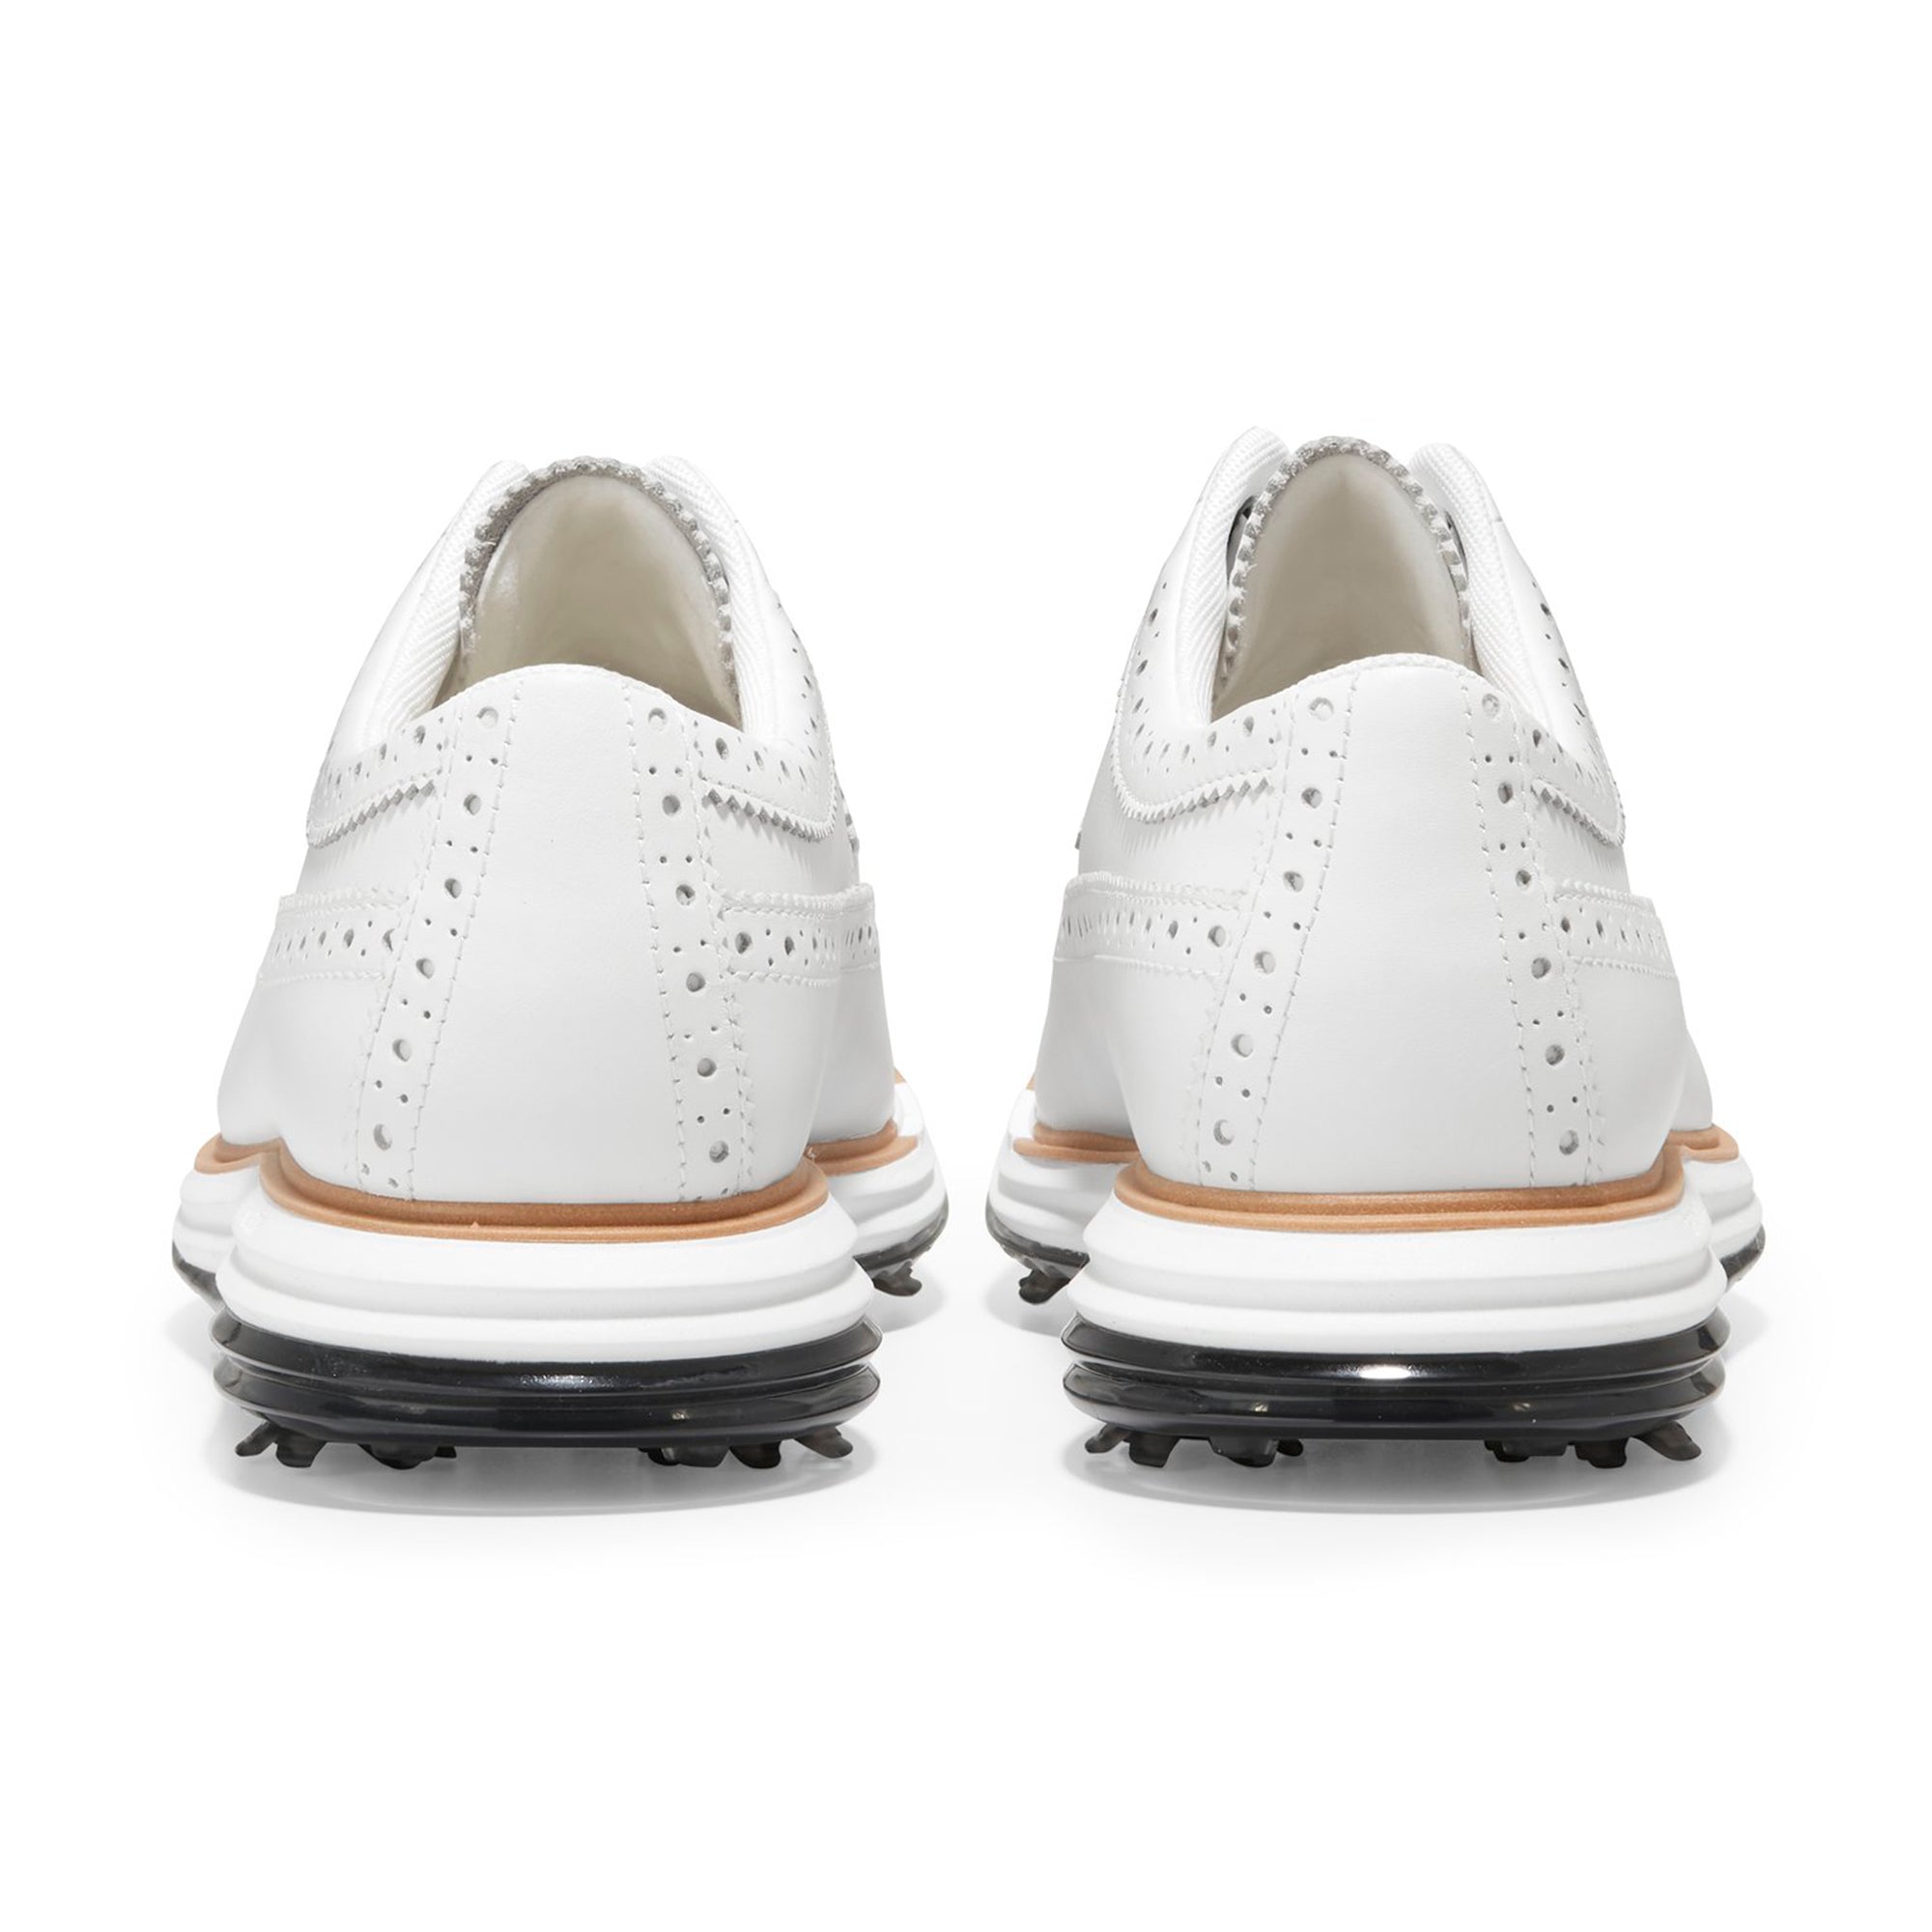 cole-haan-originalgrand-tour-golf-shoes-c36153-optic-white-natural